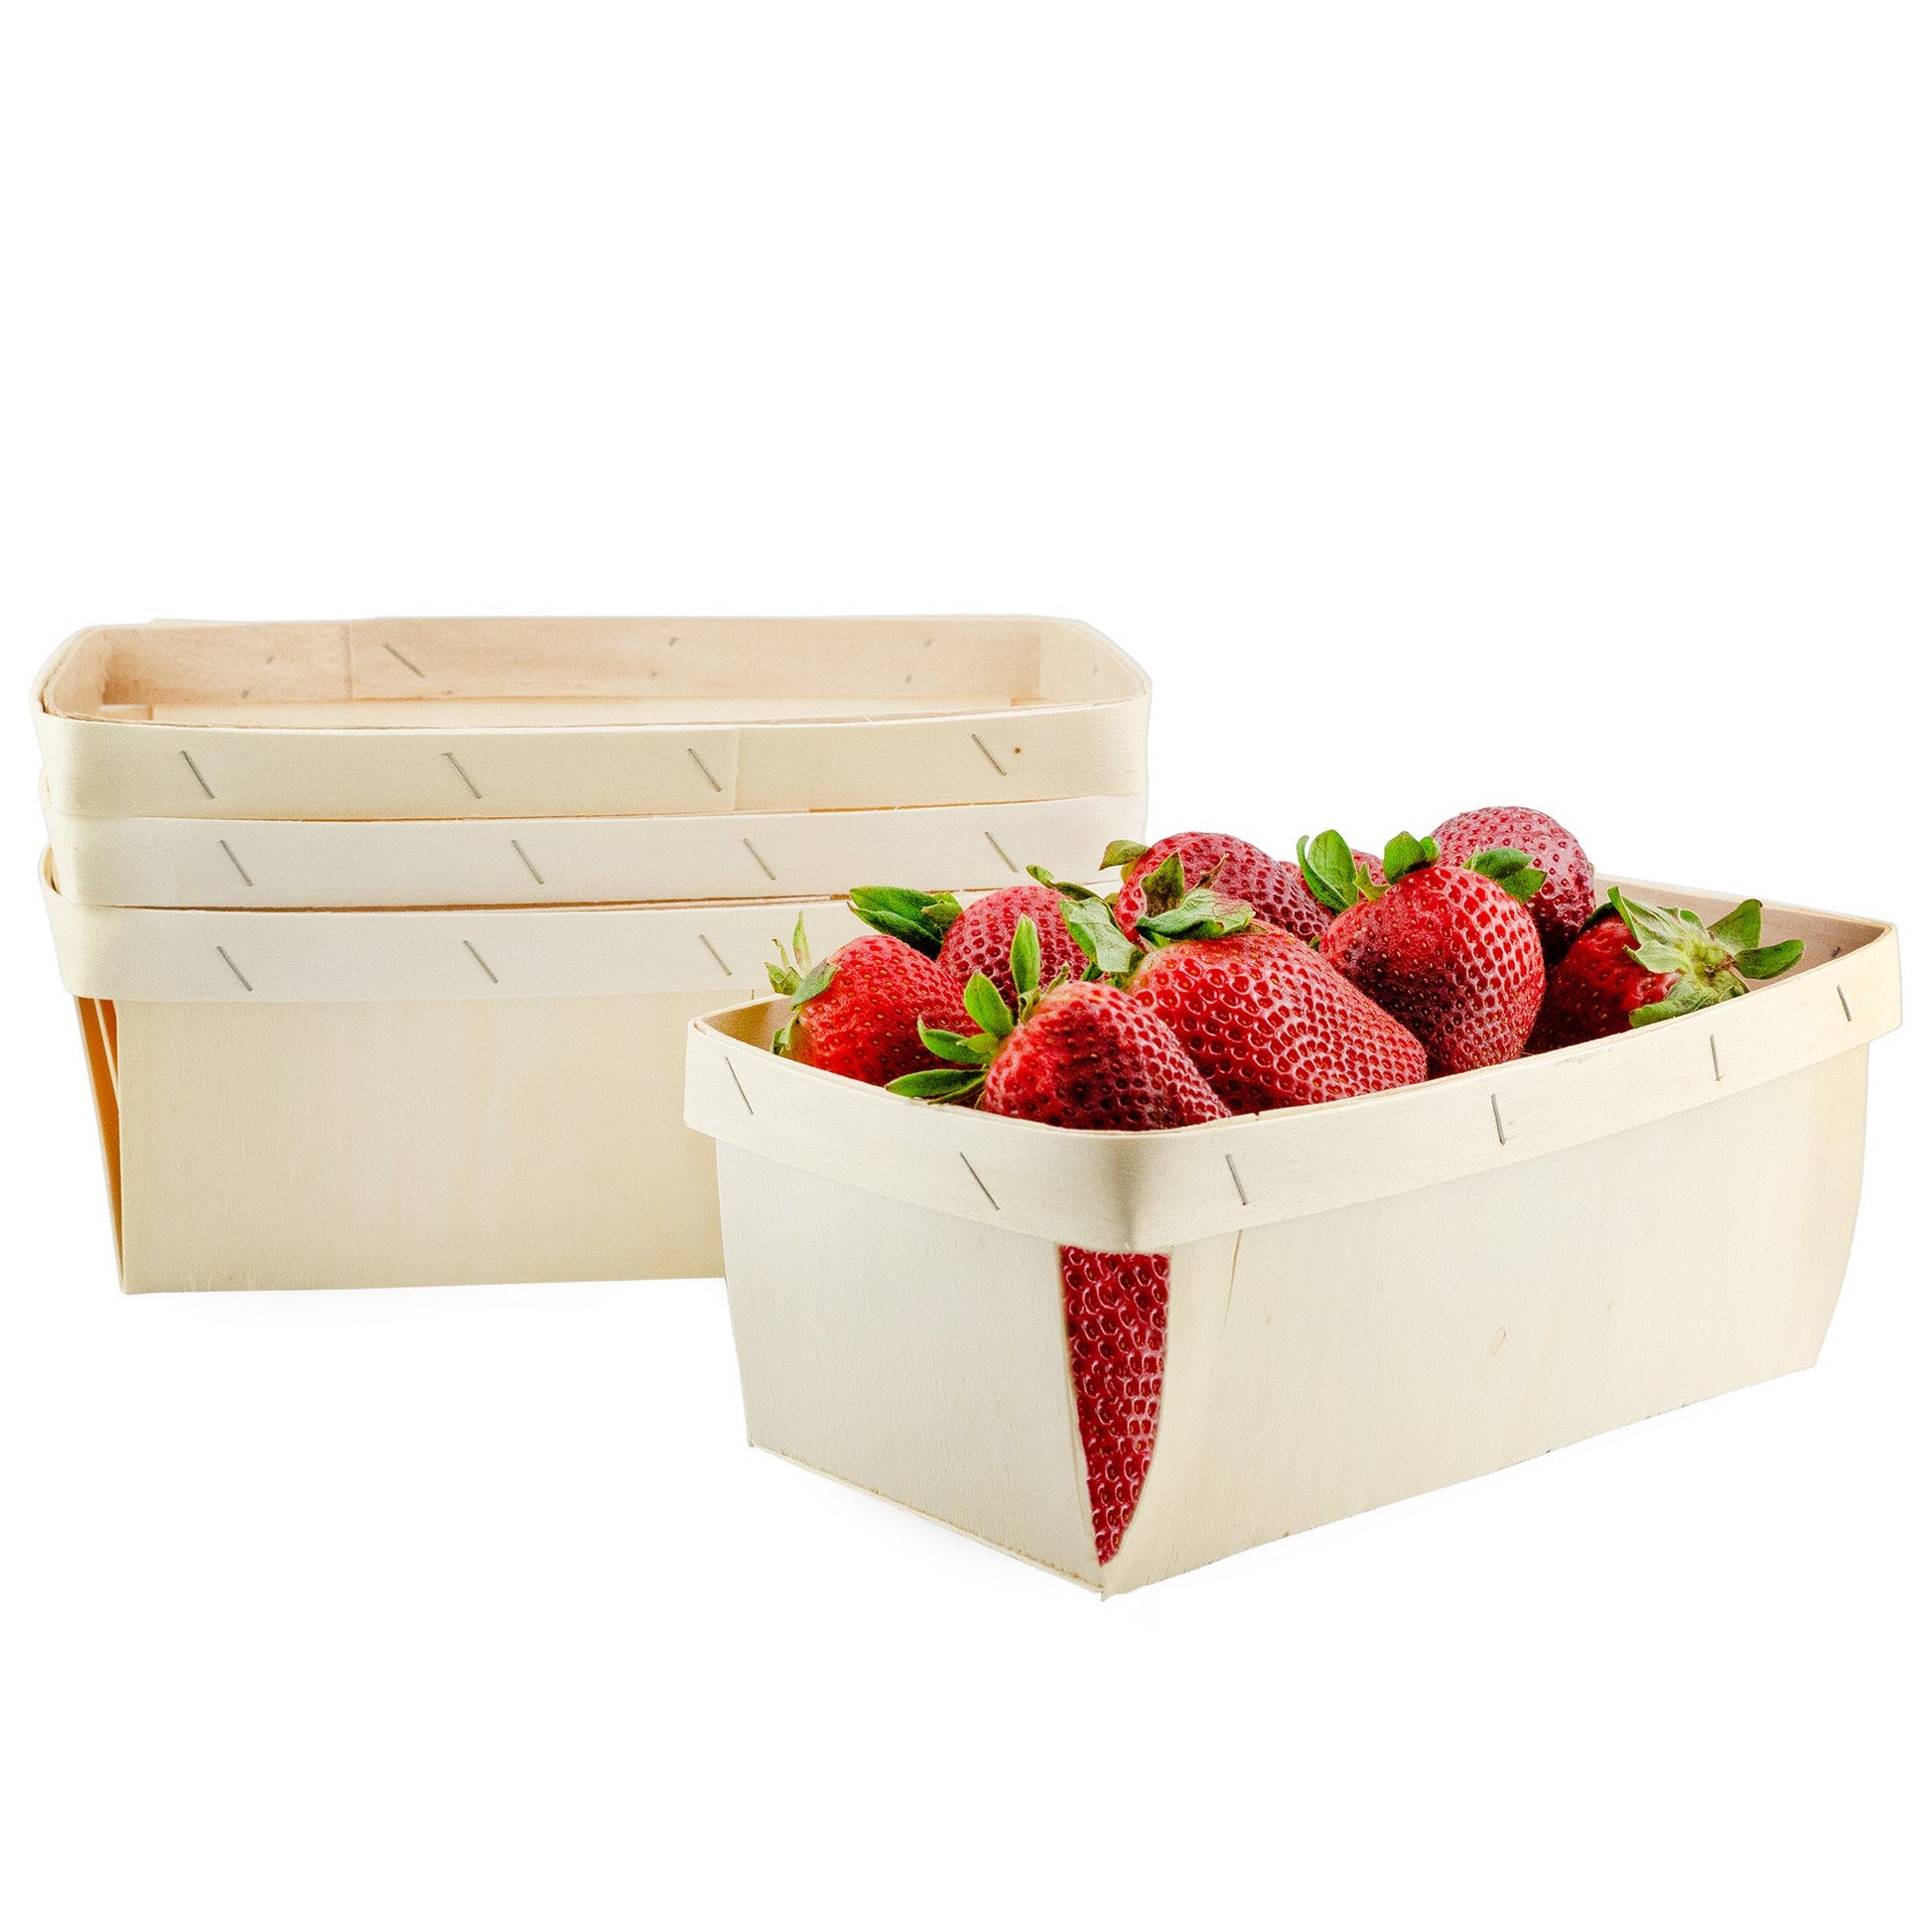 2-Quart Wooden Fruit Baskets (4-Pack) - sh2424cb0